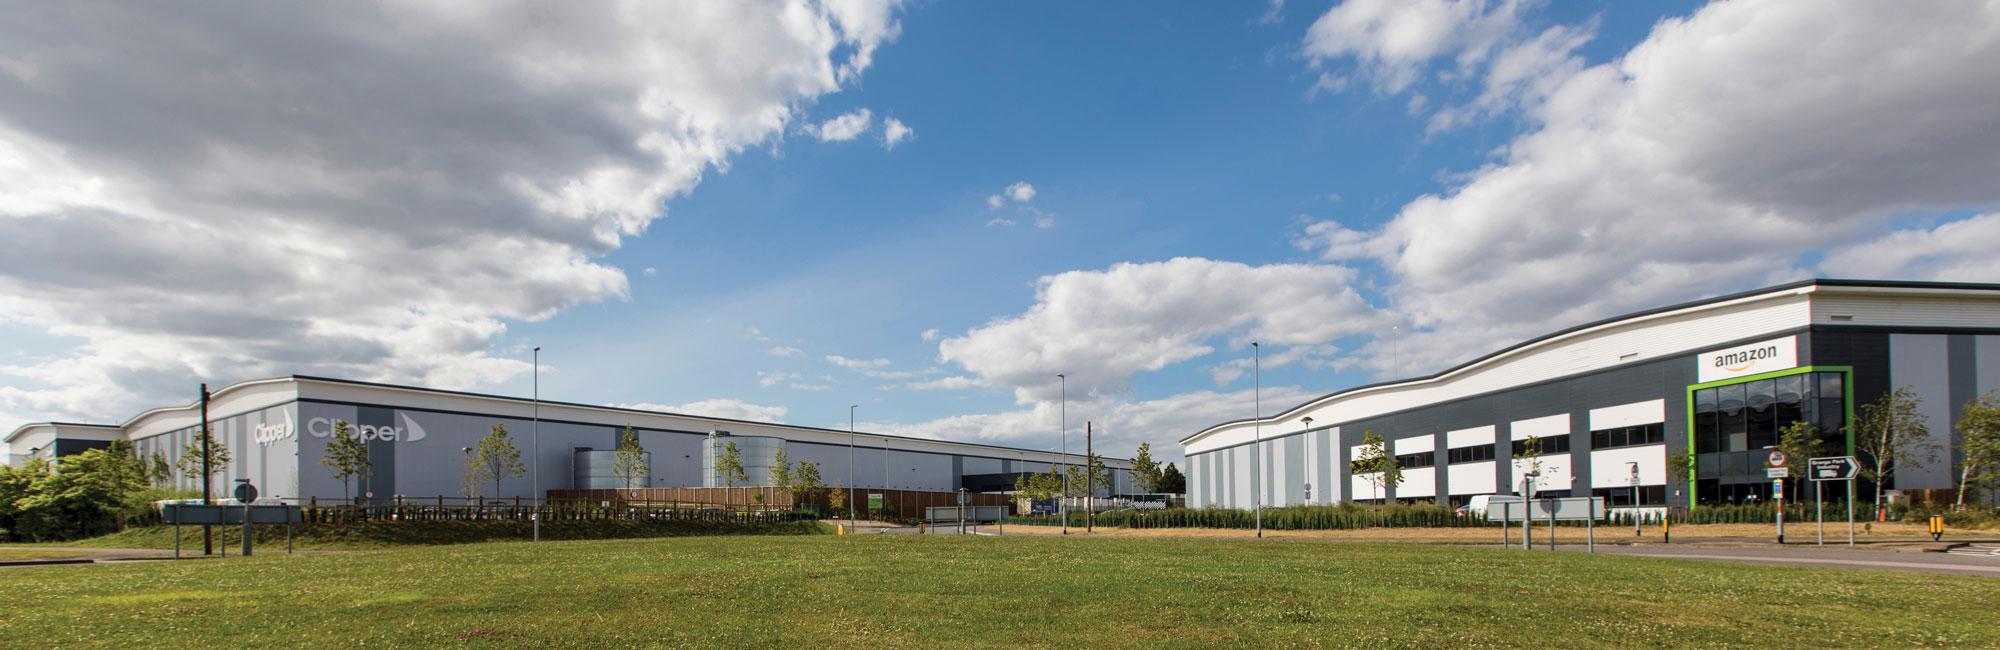 Northampton Commercial Park logistics warehouses